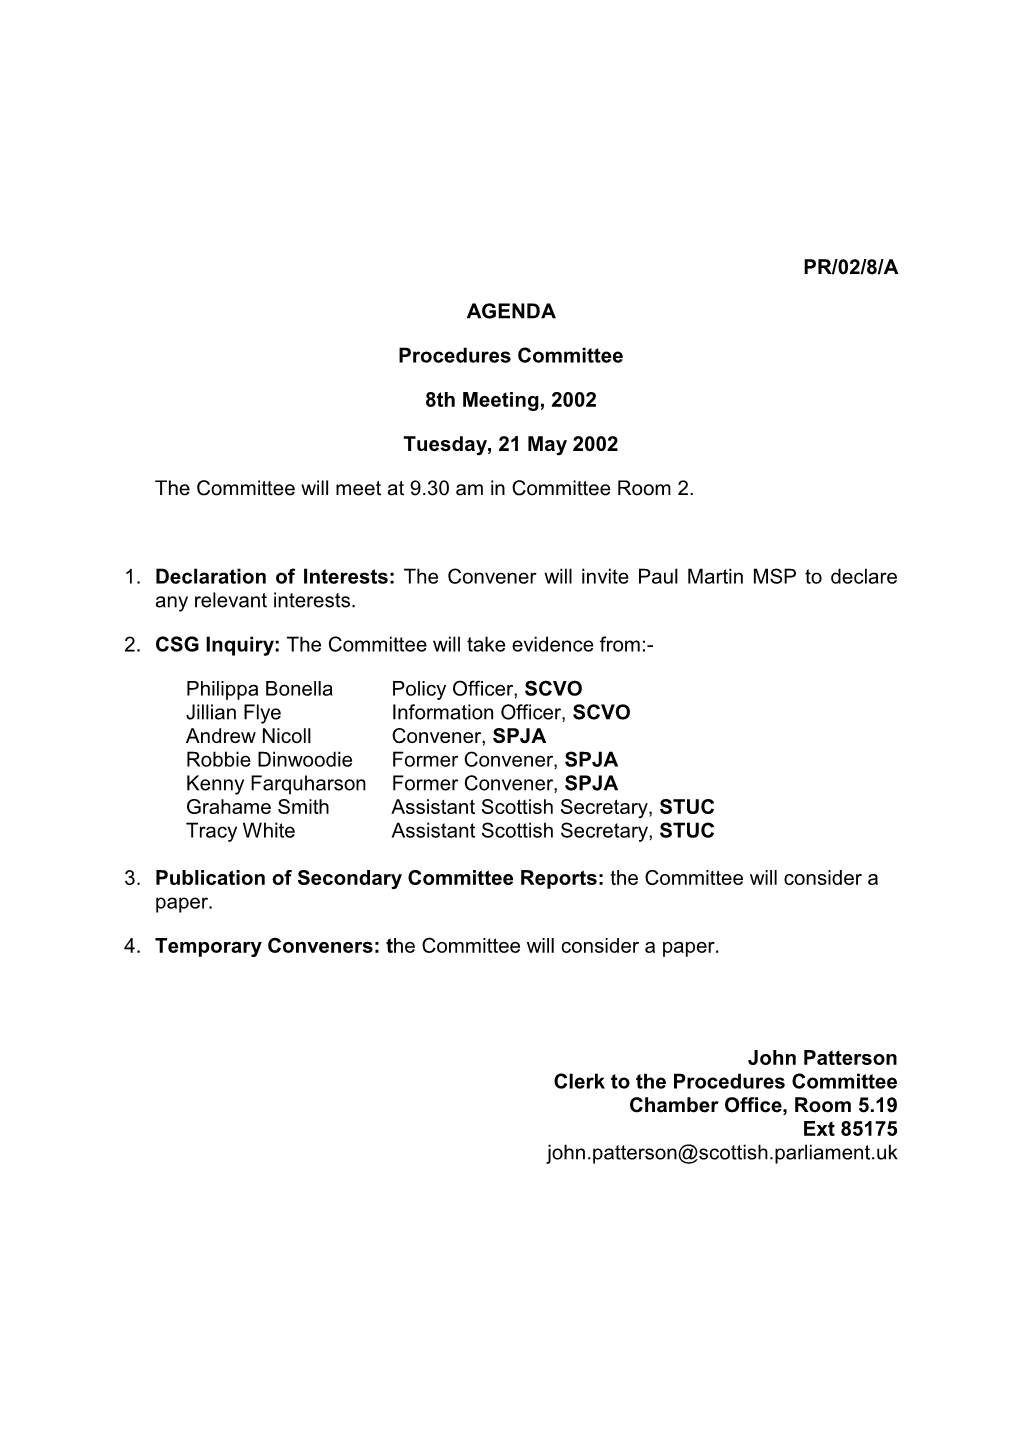 PR/02/8/A AGENDA Procedures Committee 8Th Meeting, 2002